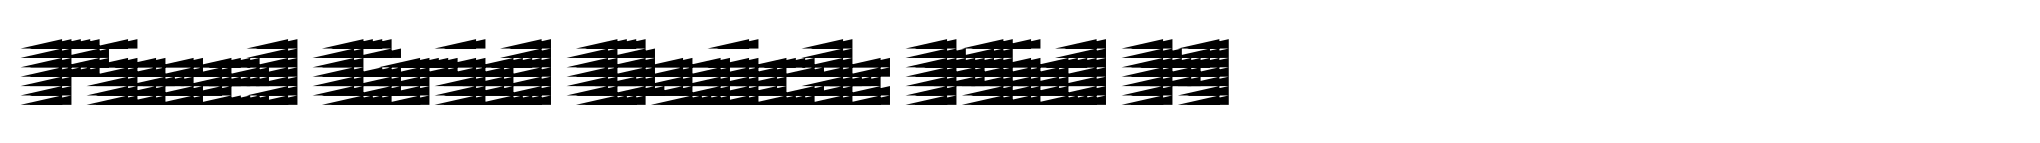 Pixel Grid Quick Mid M image